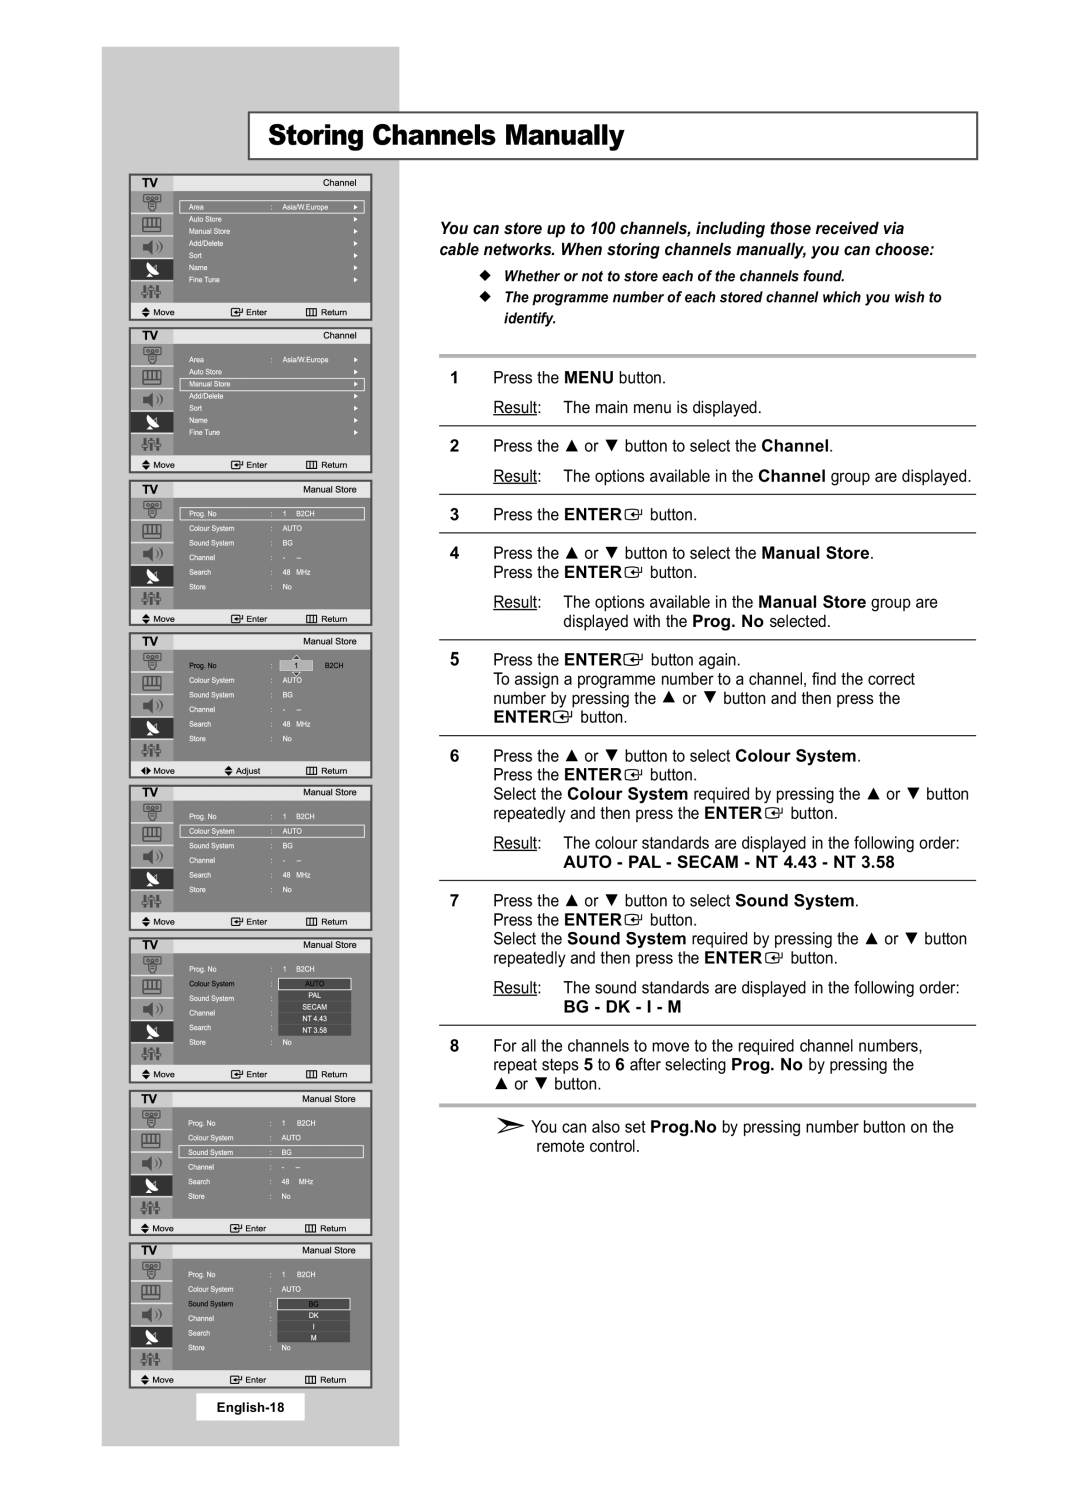 Samsung LA22N21B manual Storing Channels Manually, AUTO - PAL - SECAM - NT 4.43 - NT, Bg - Dk - I - M 